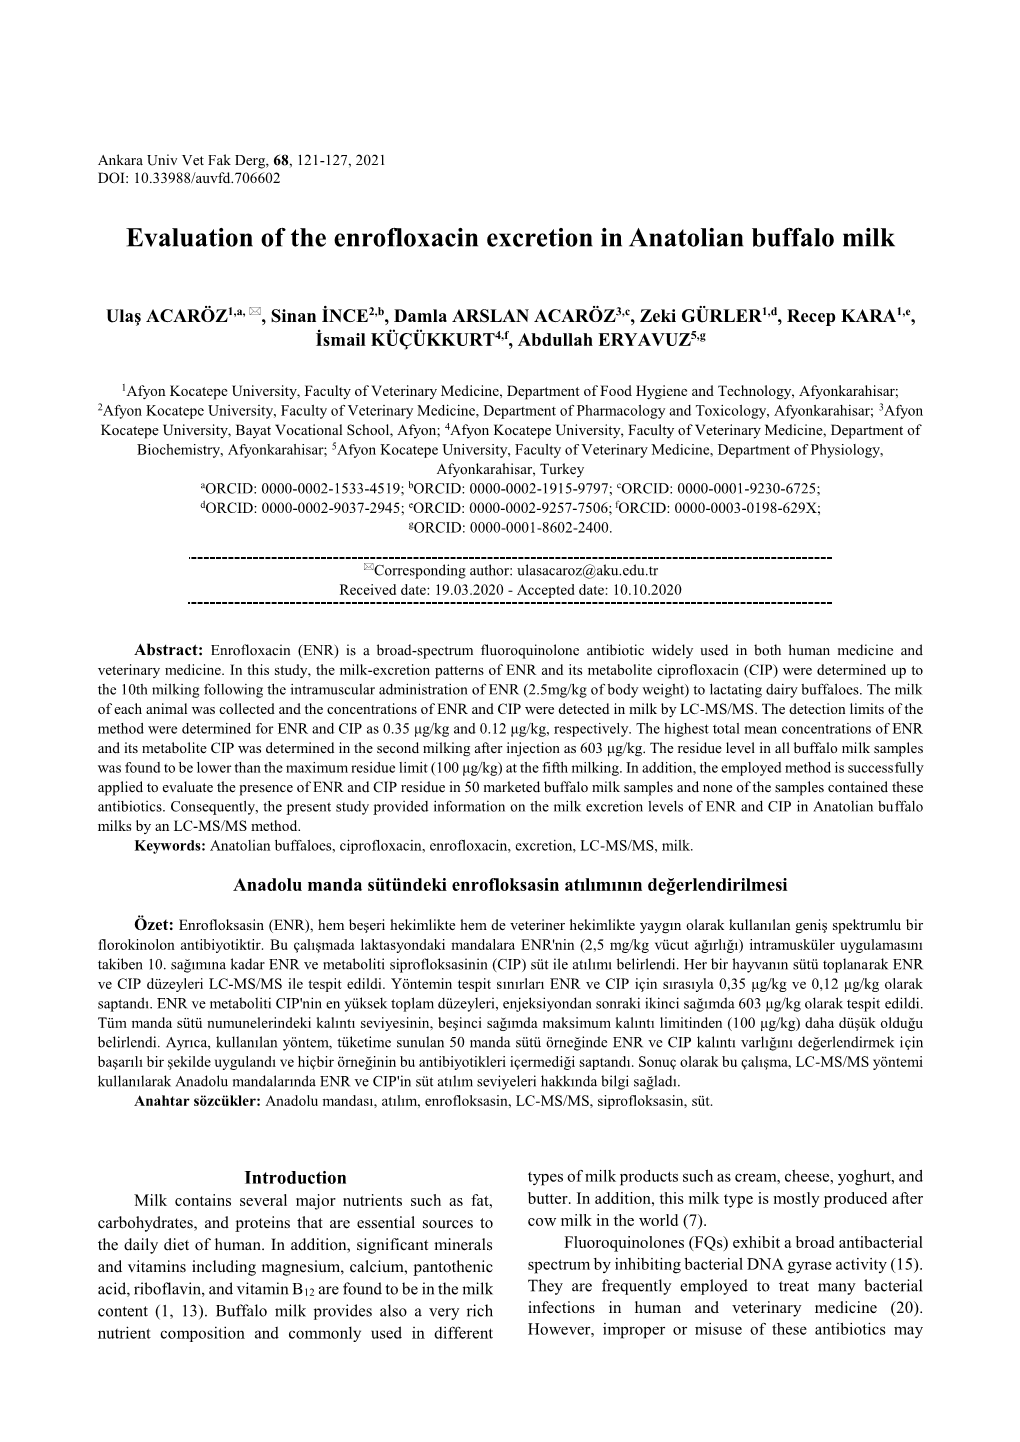 Evaluation of the Enrofloxacin Excretion in Anatolian Buffalo Milk